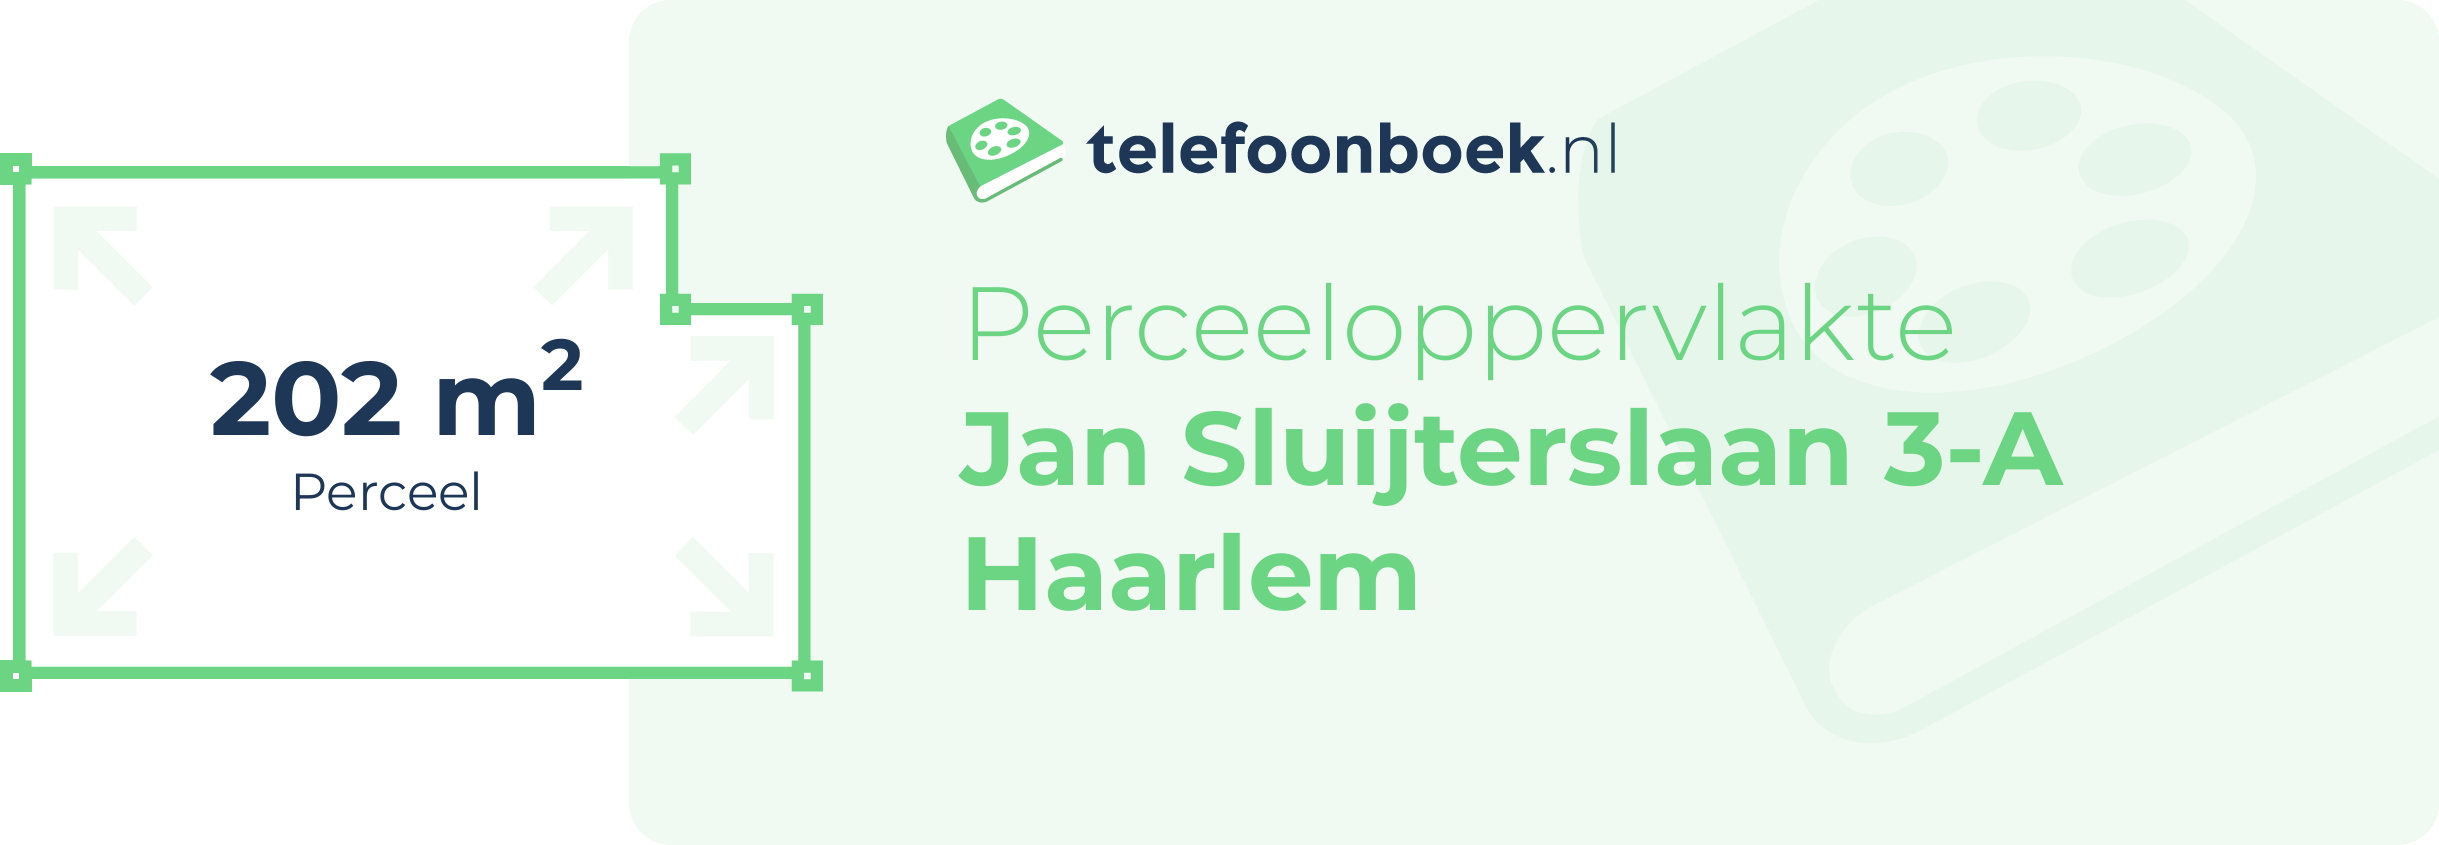 Perceeloppervlakte Jan Sluijterslaan 3-A Haarlem